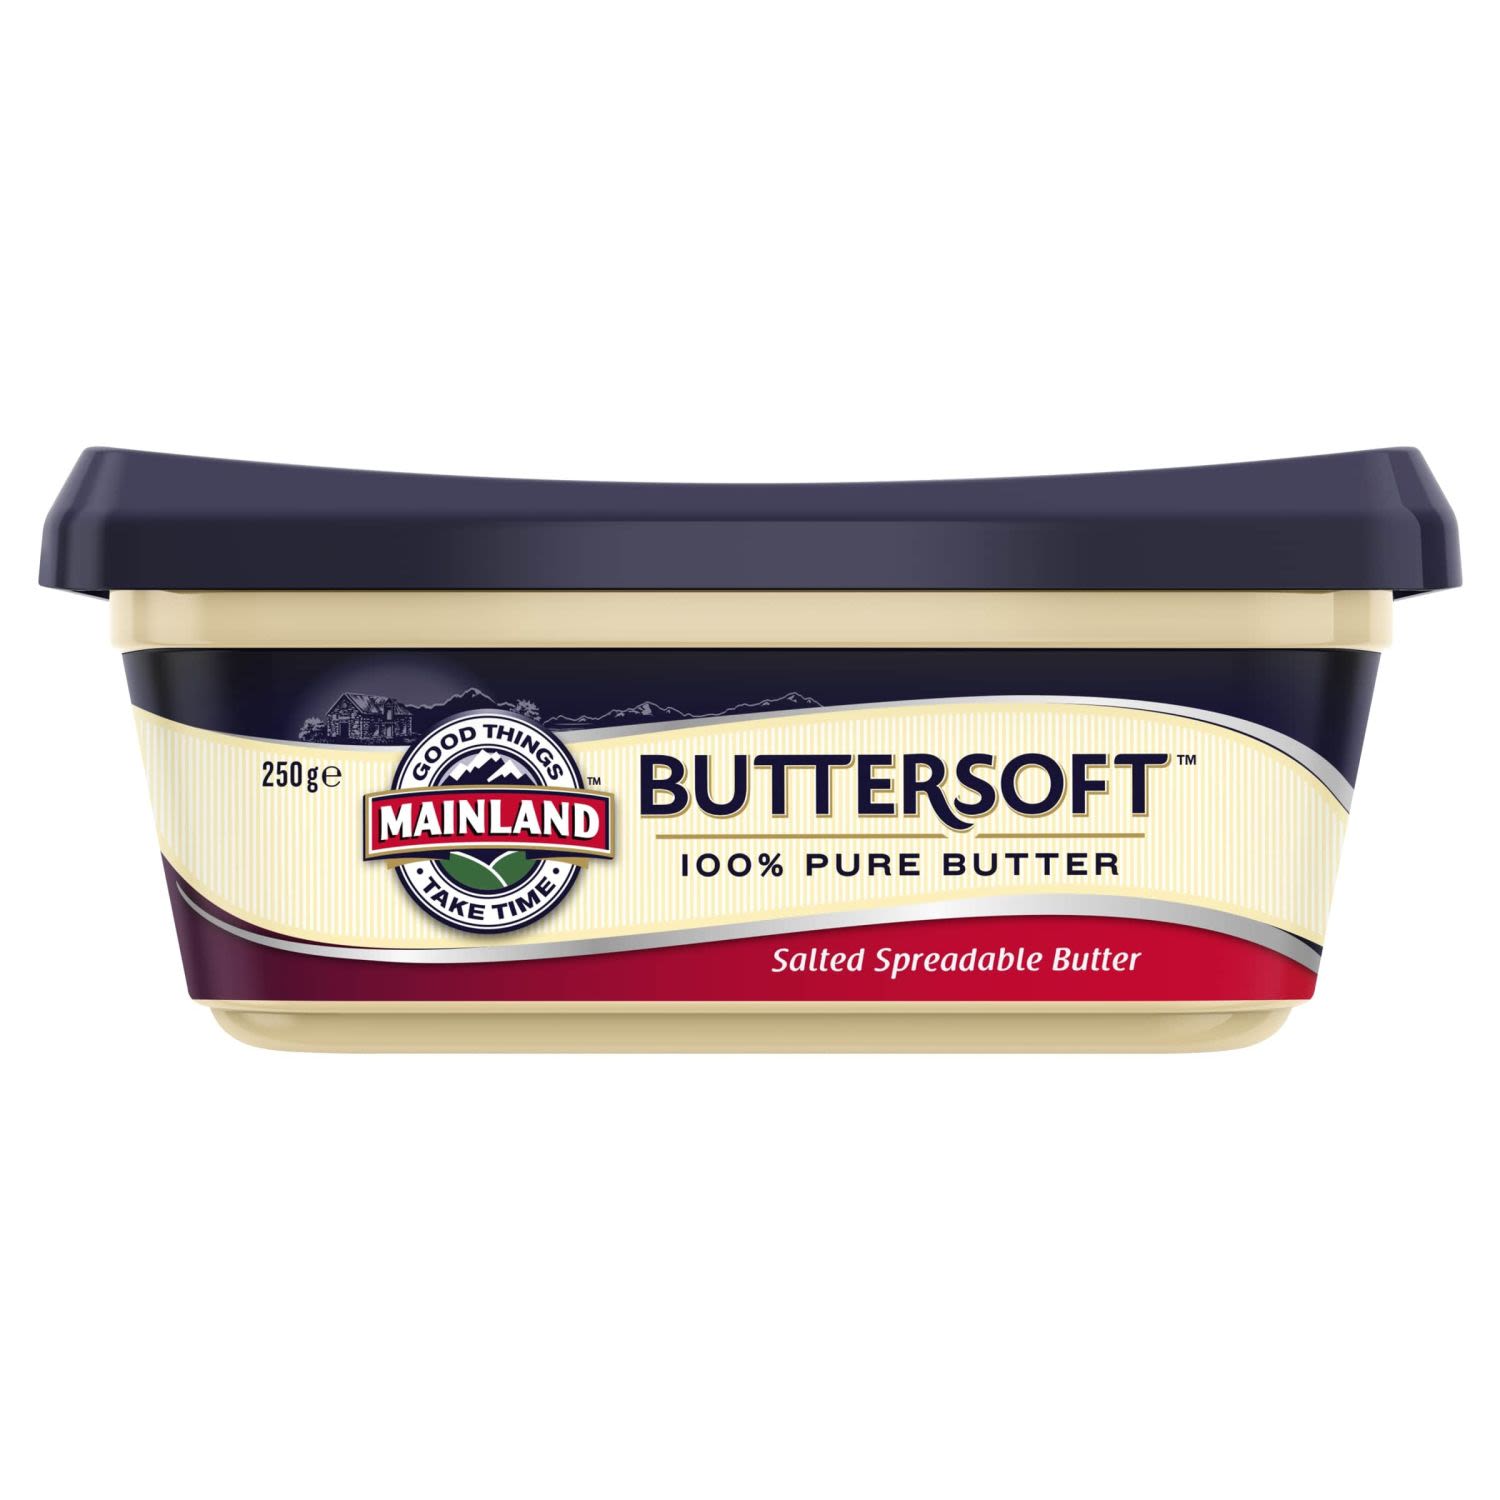 Mainland Buttersoft Salted Spreadable Butter